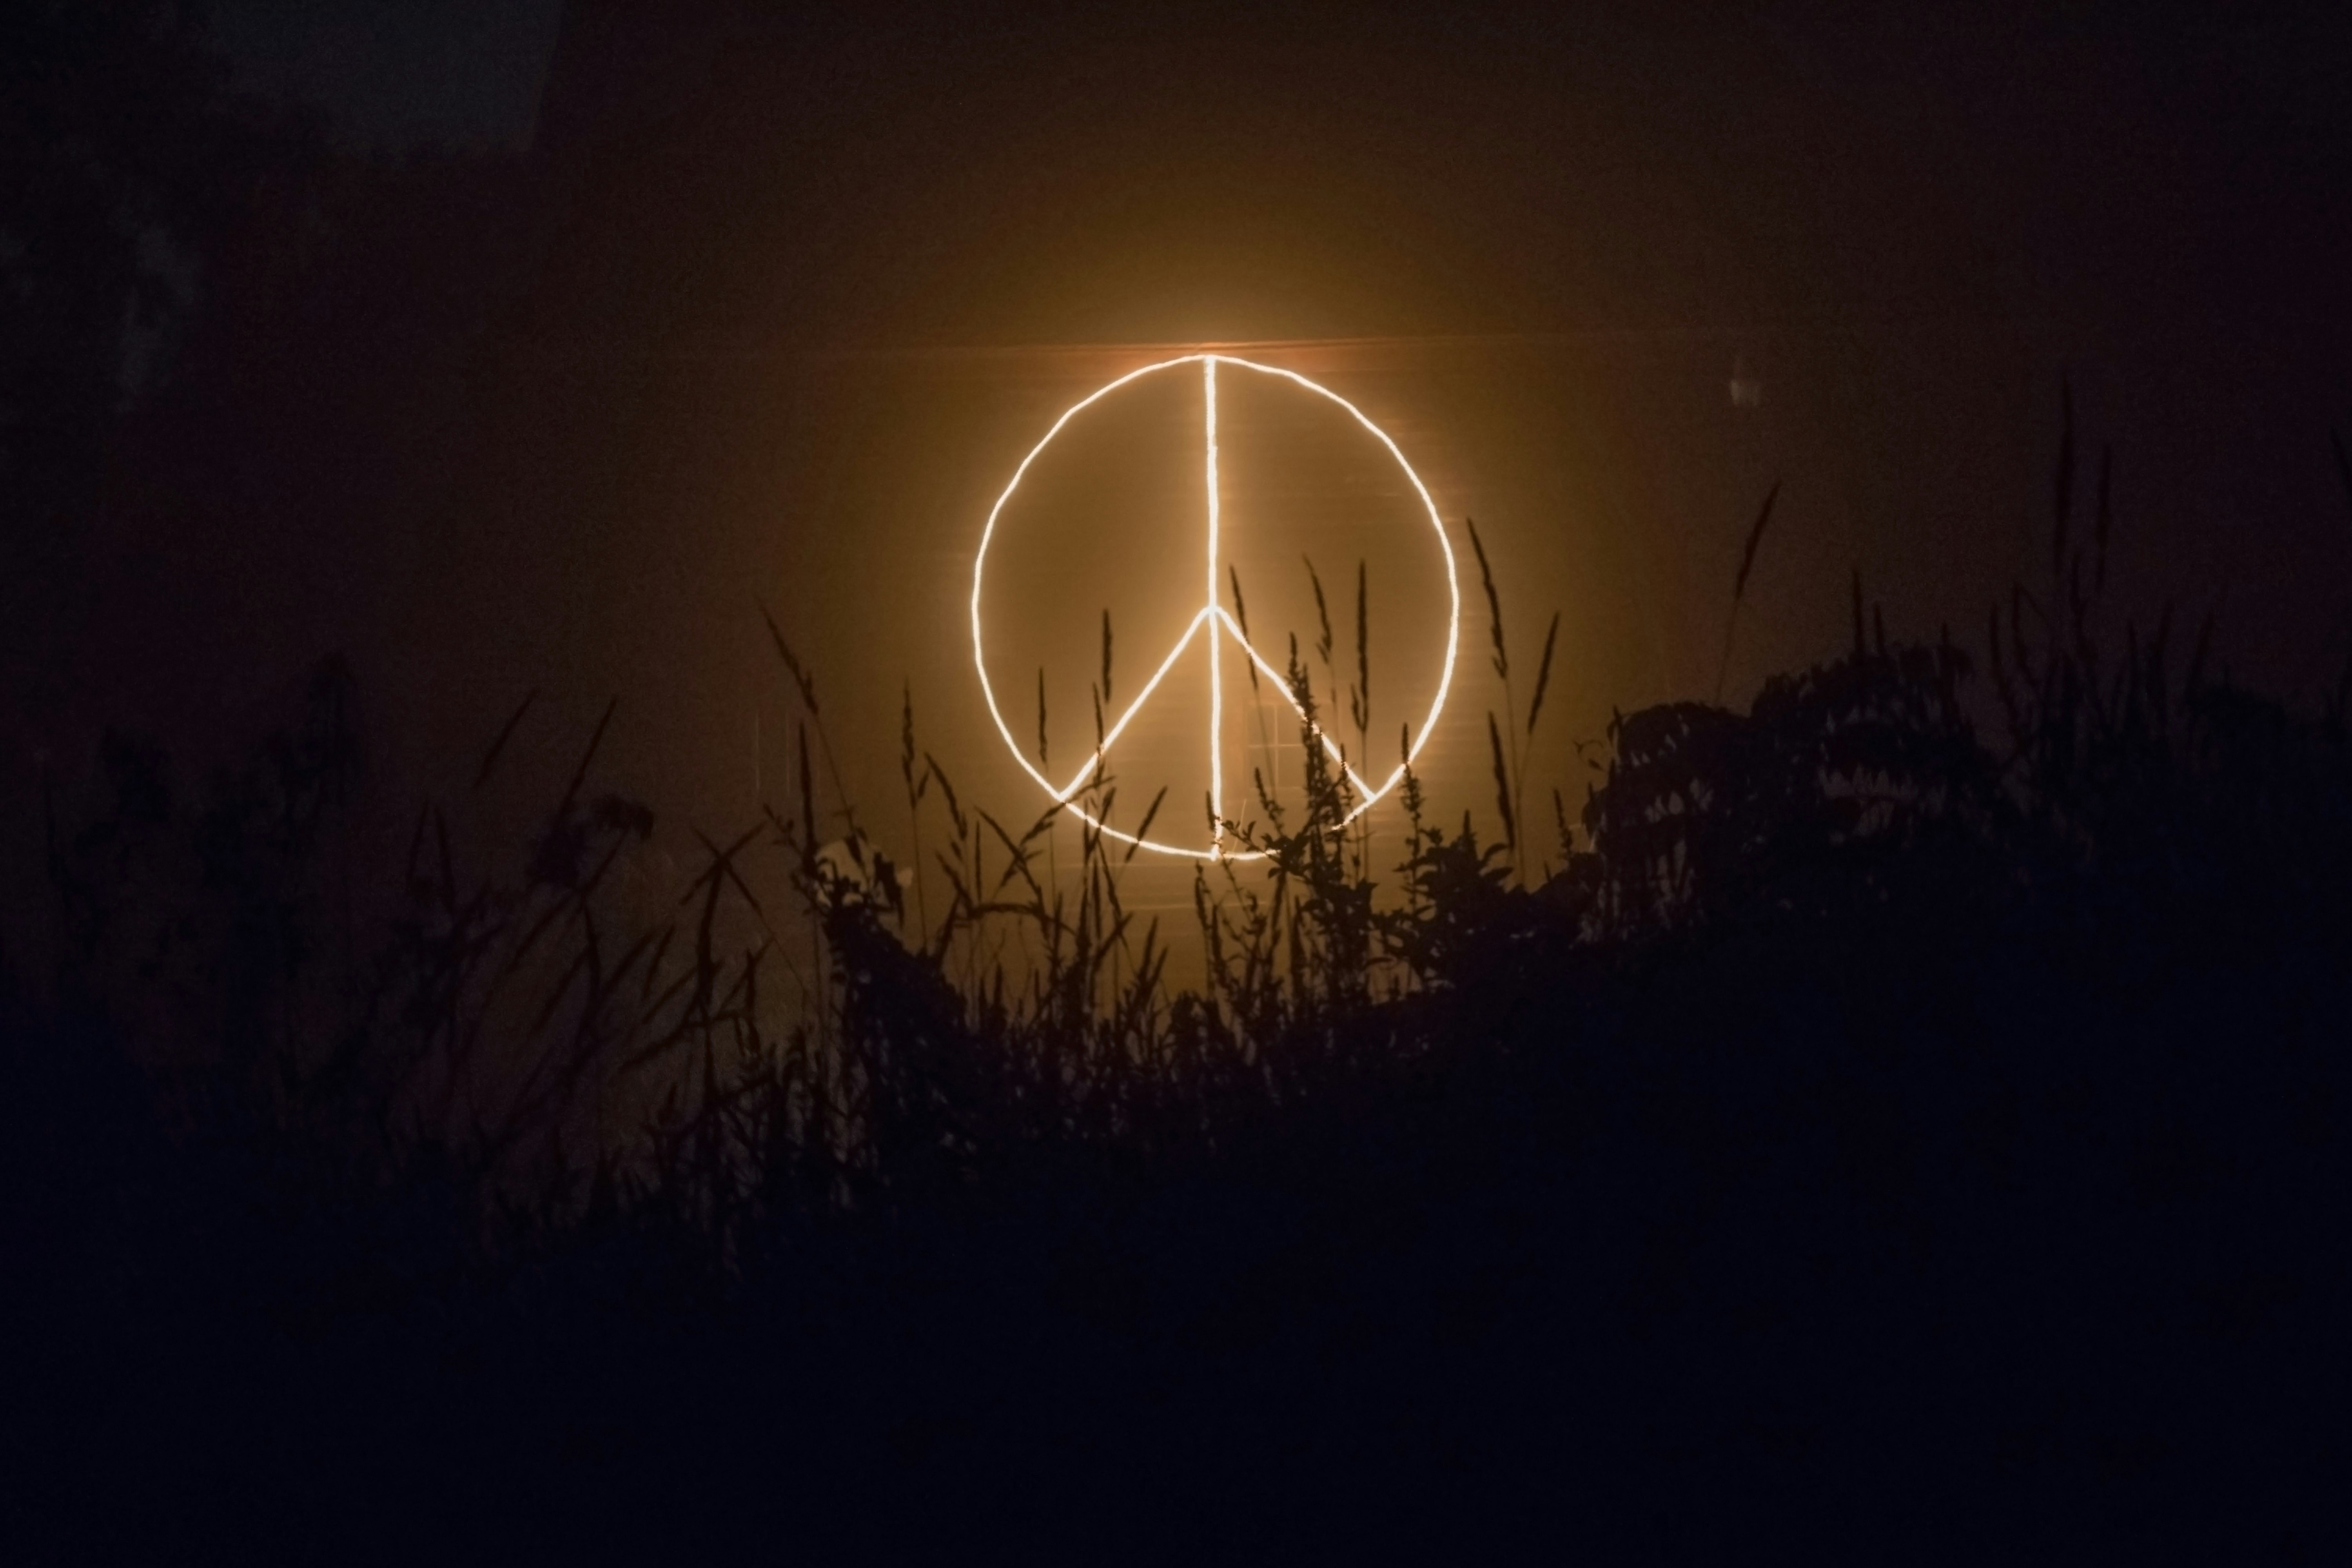 Peace sign logo neon signage